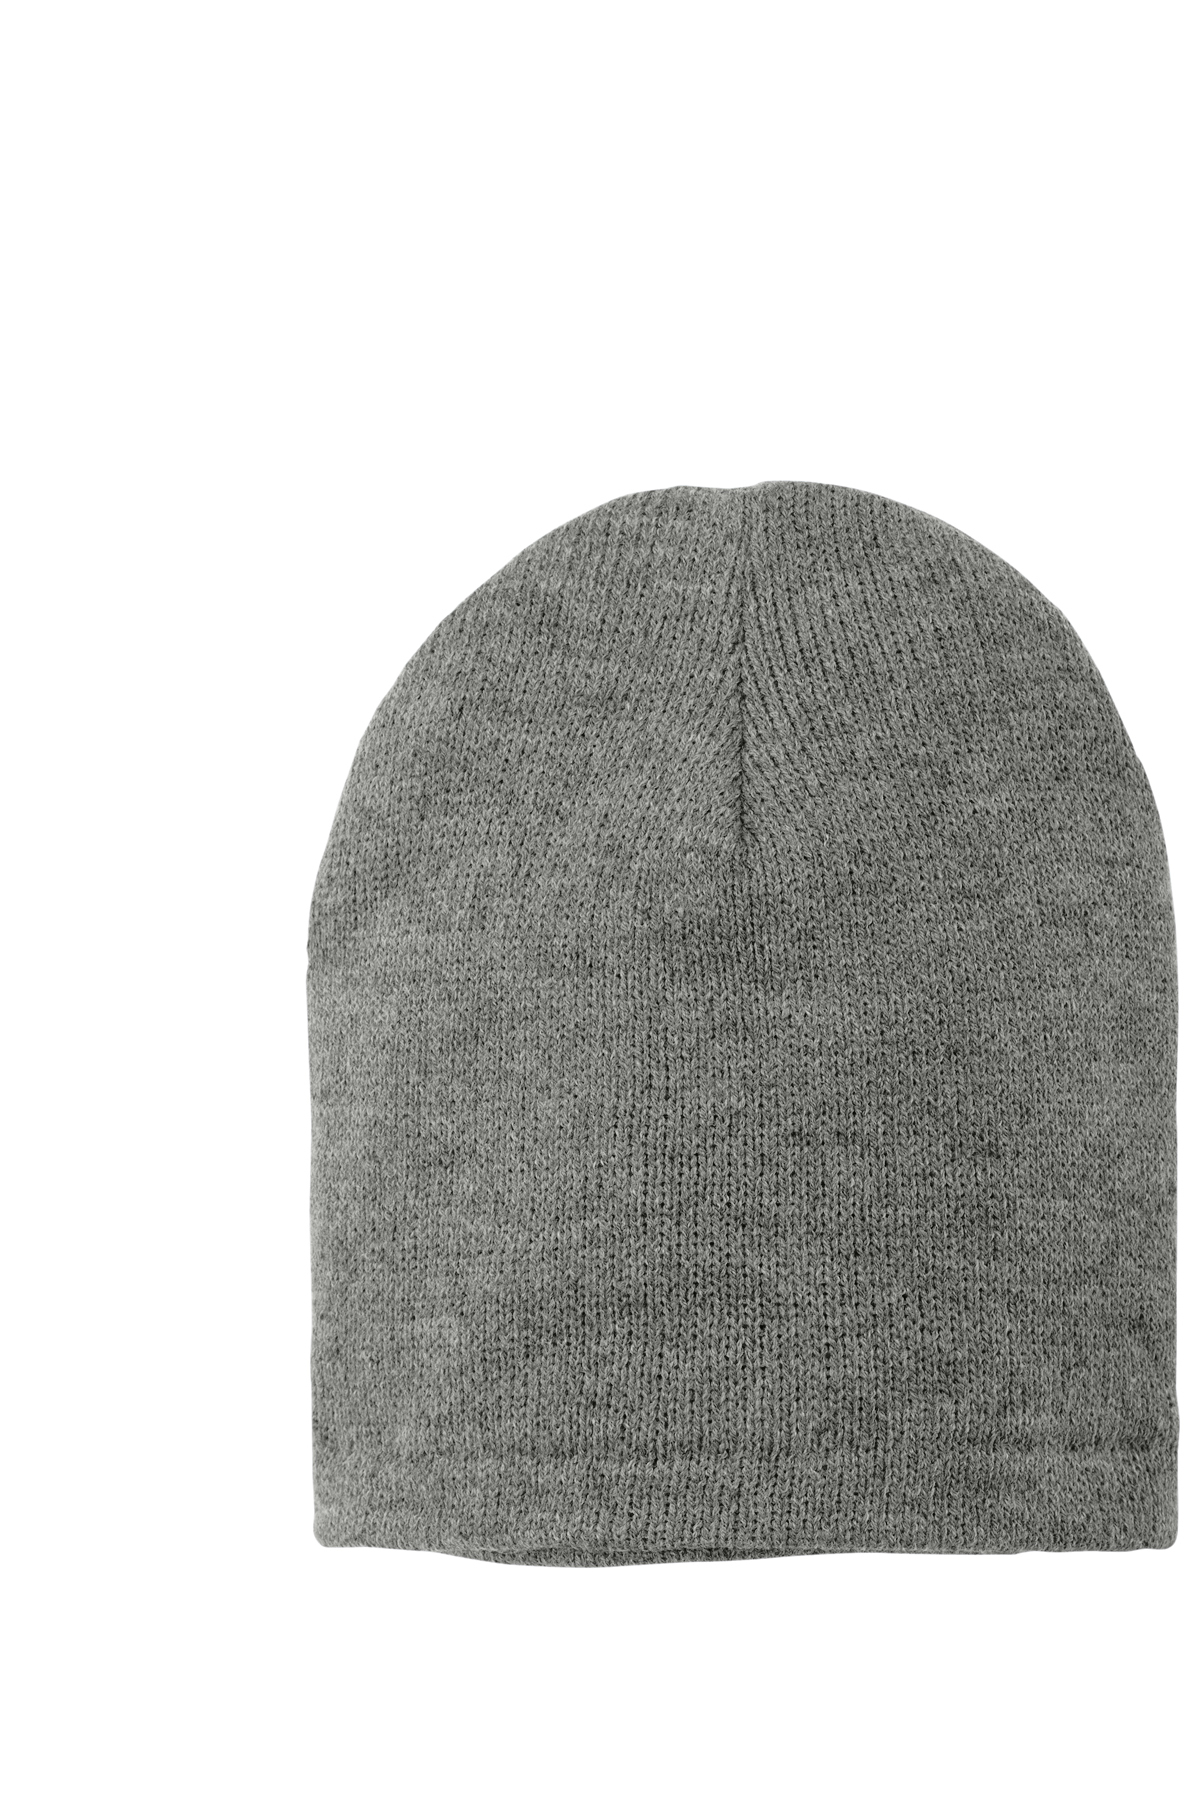 Port & Company Fleece-Lined Beanie Cap, Product